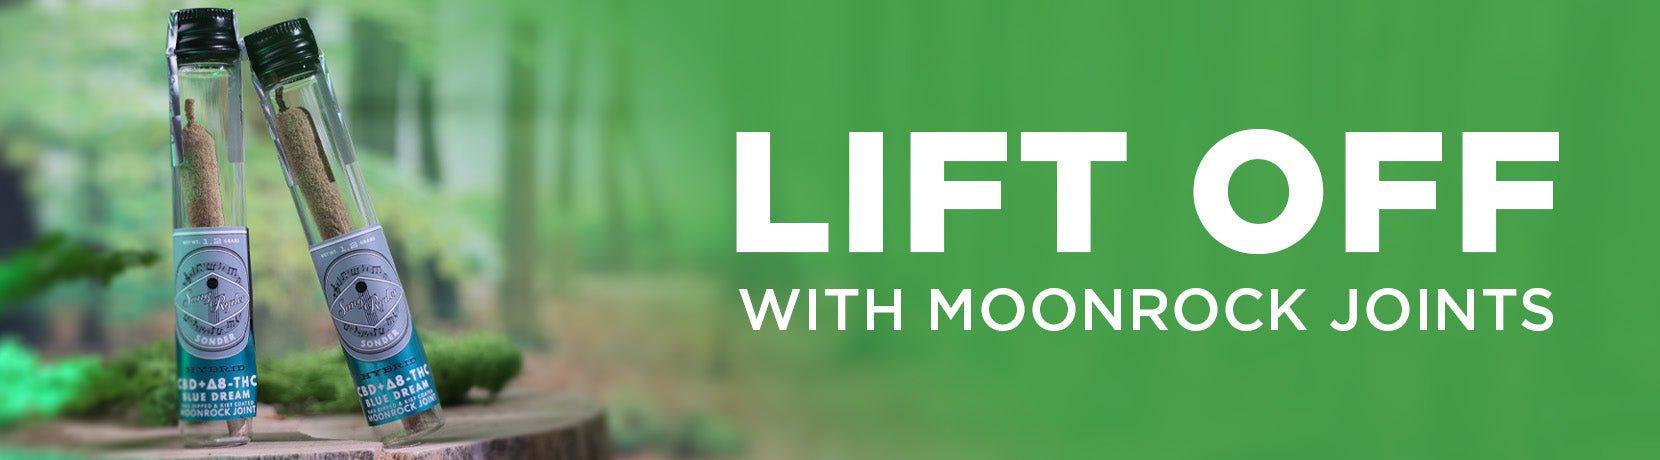 Lift Off with Moonrock Joints - Shop CBD Kratom